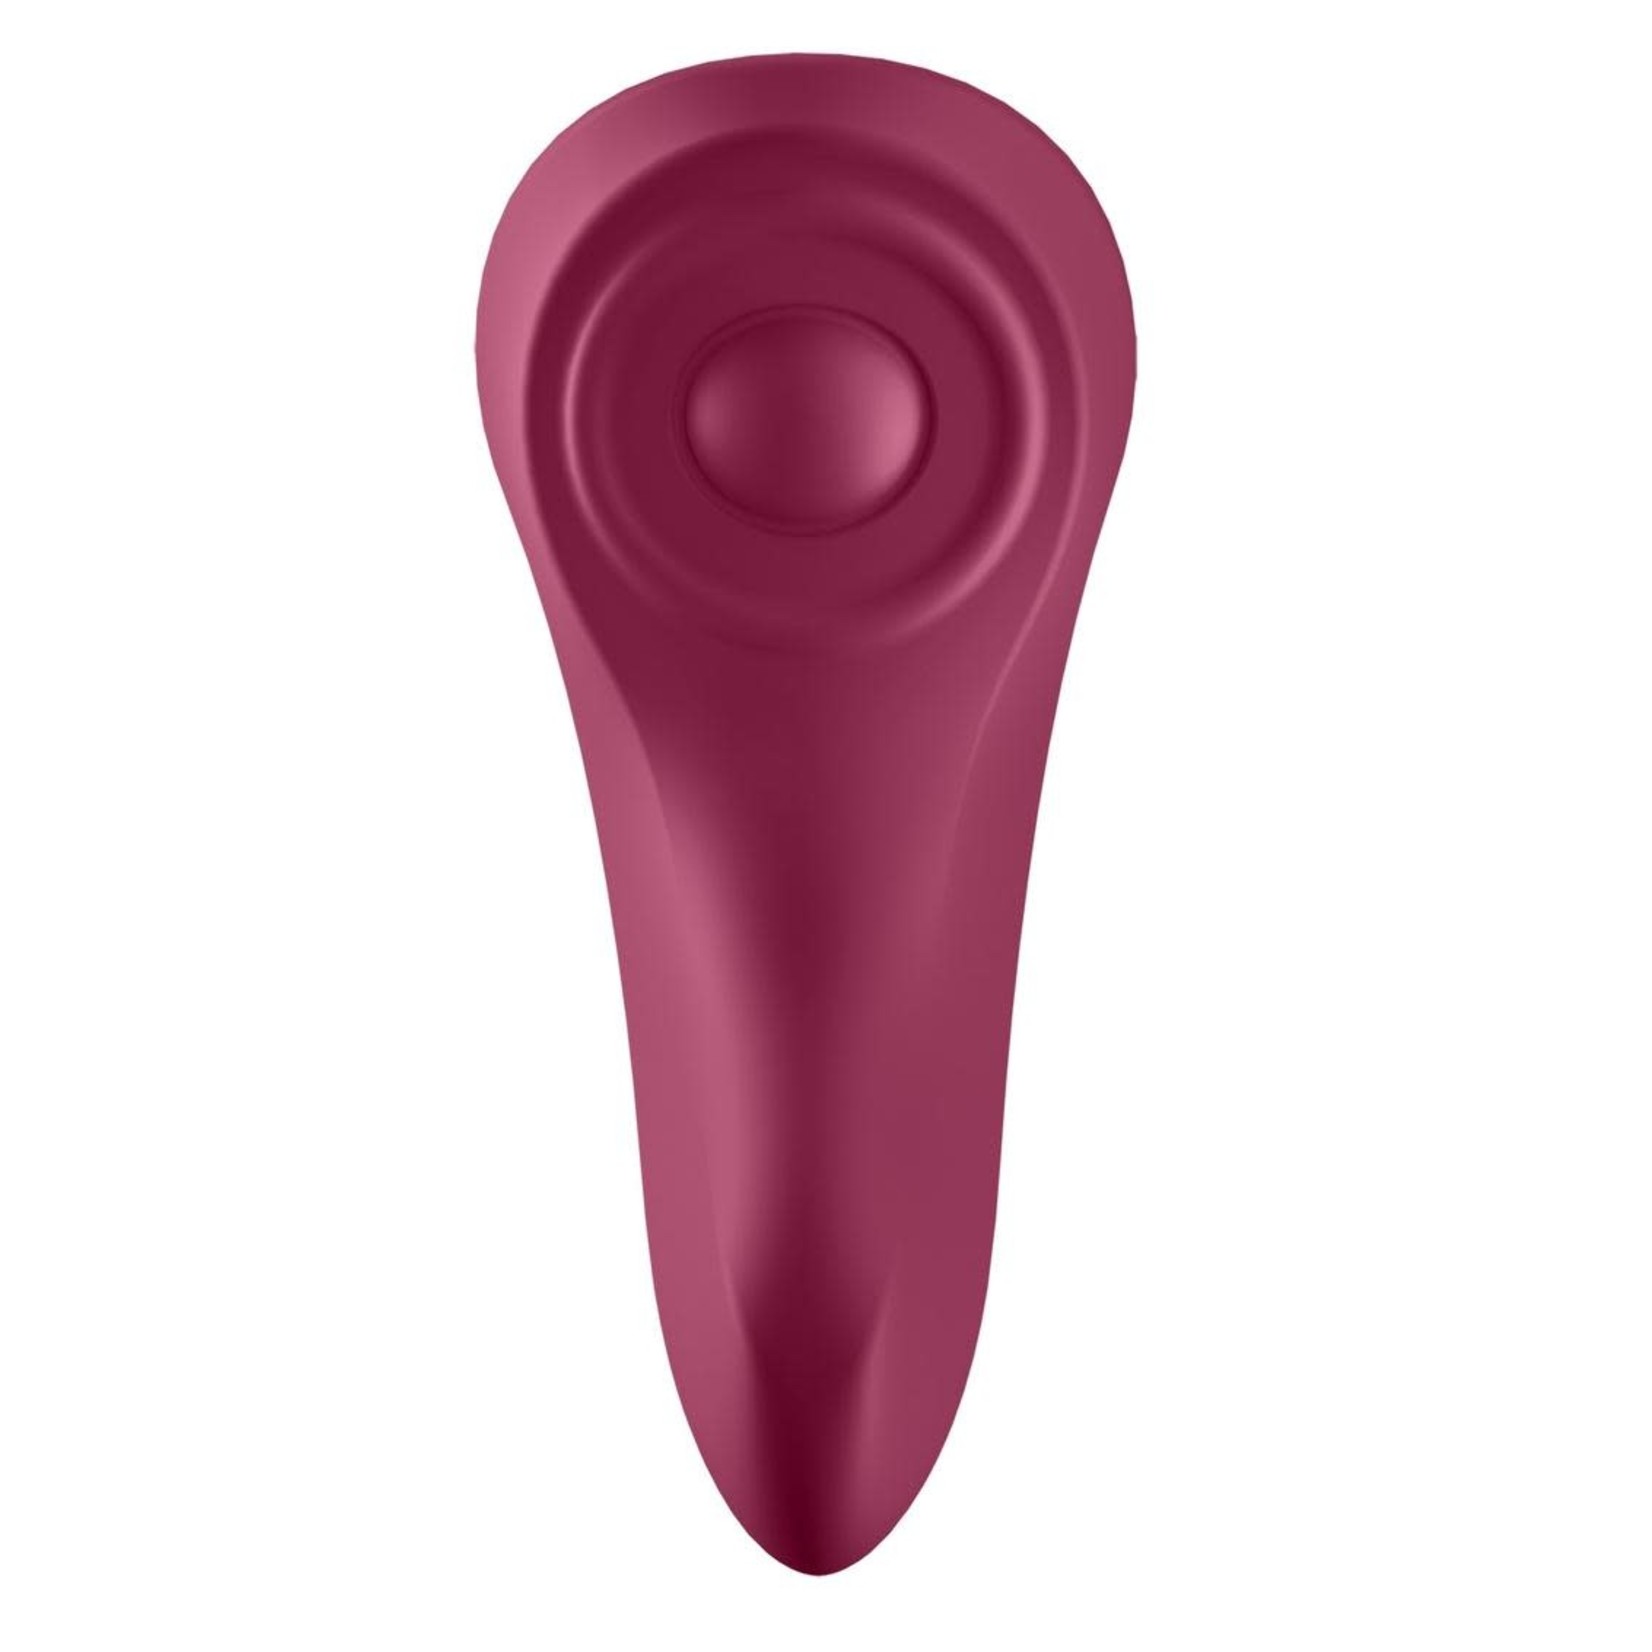 Satisfyer Sexy Secret Panty Vibrator-Wine Red